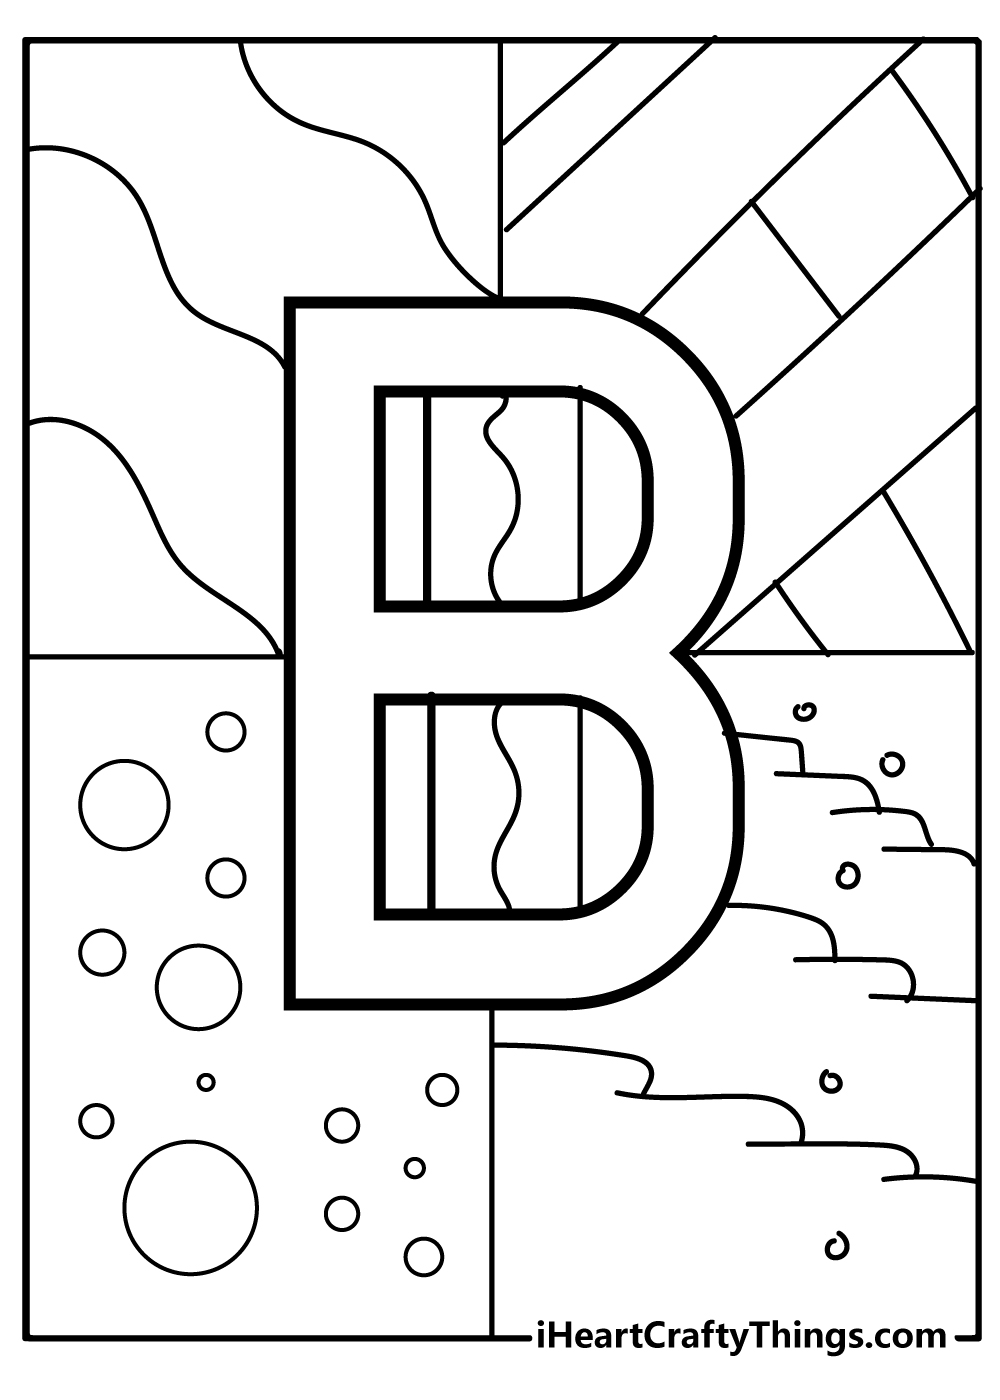 Letter B Coloring Original Sheet for children free download